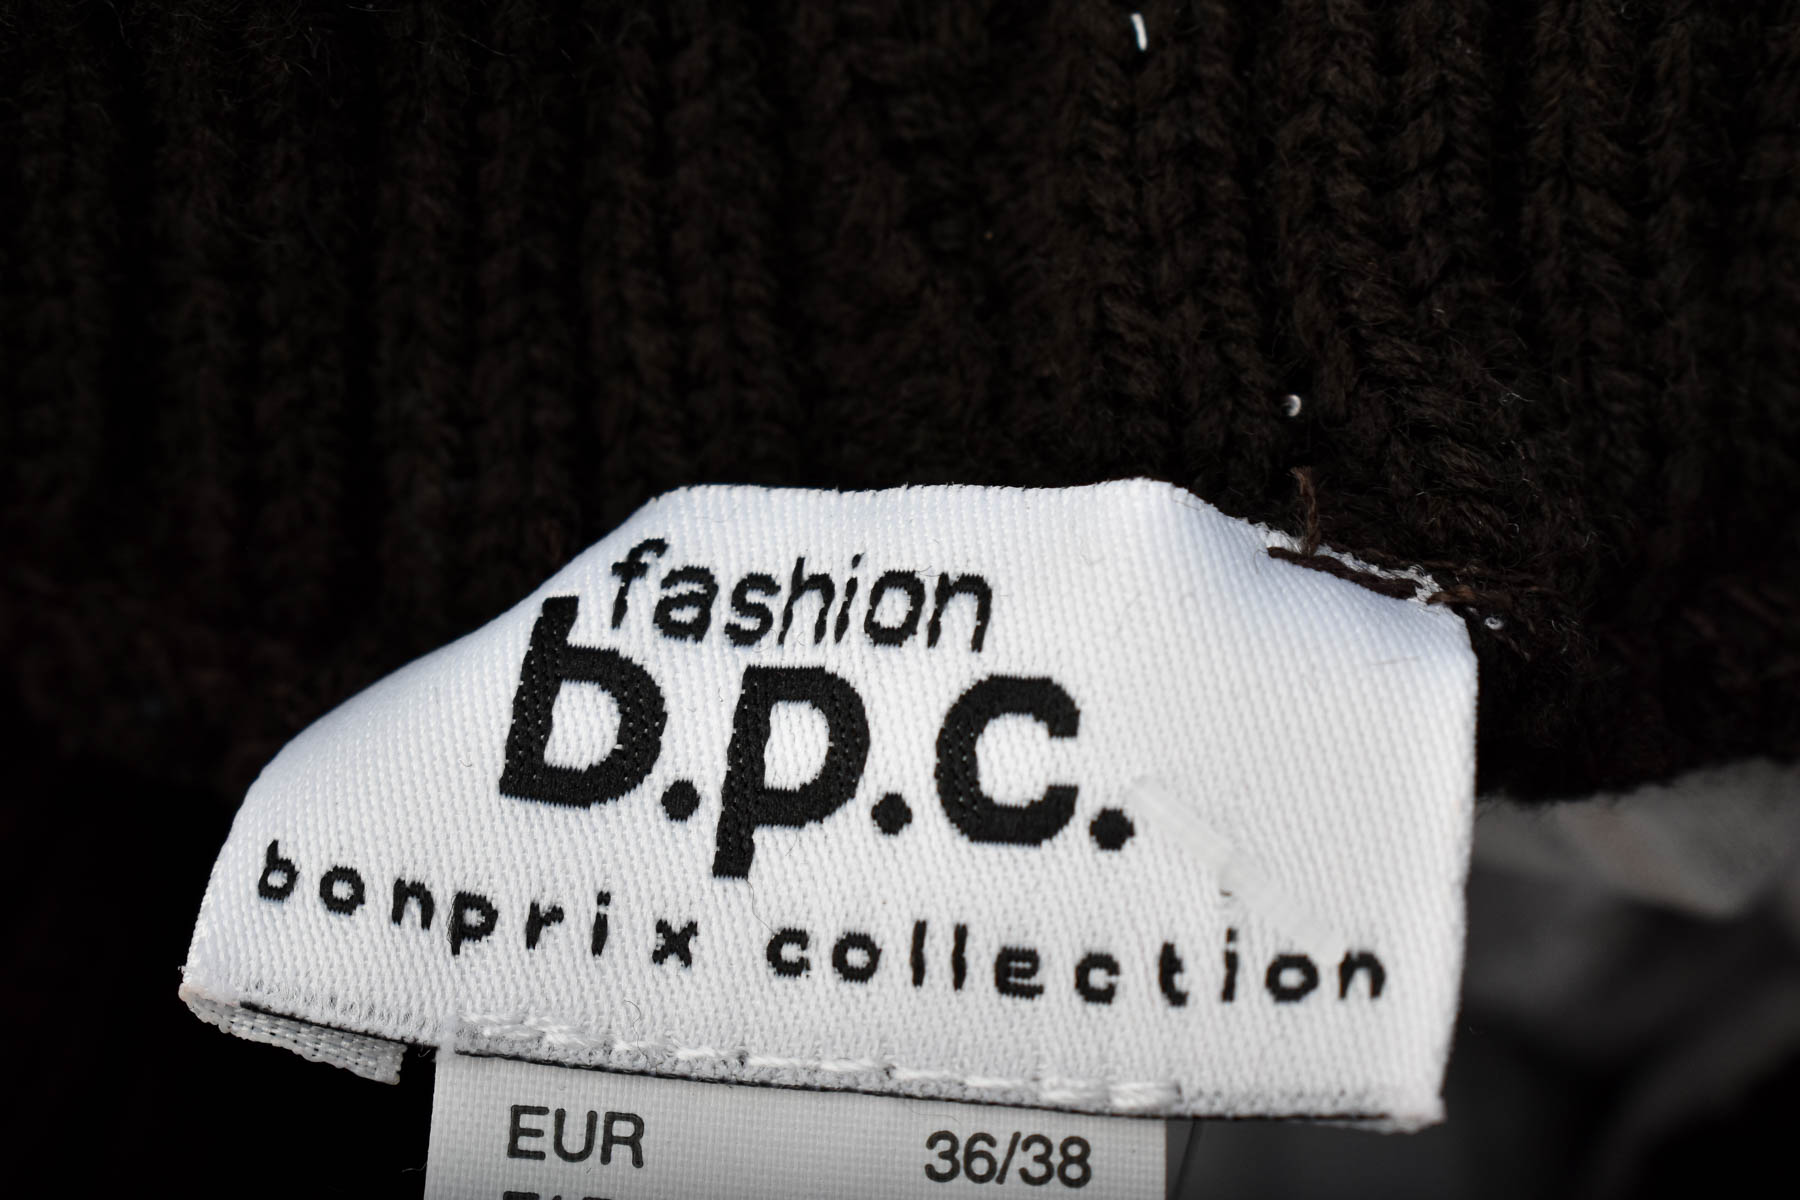 Sukienka - Bpc Bonprix Collection - 2